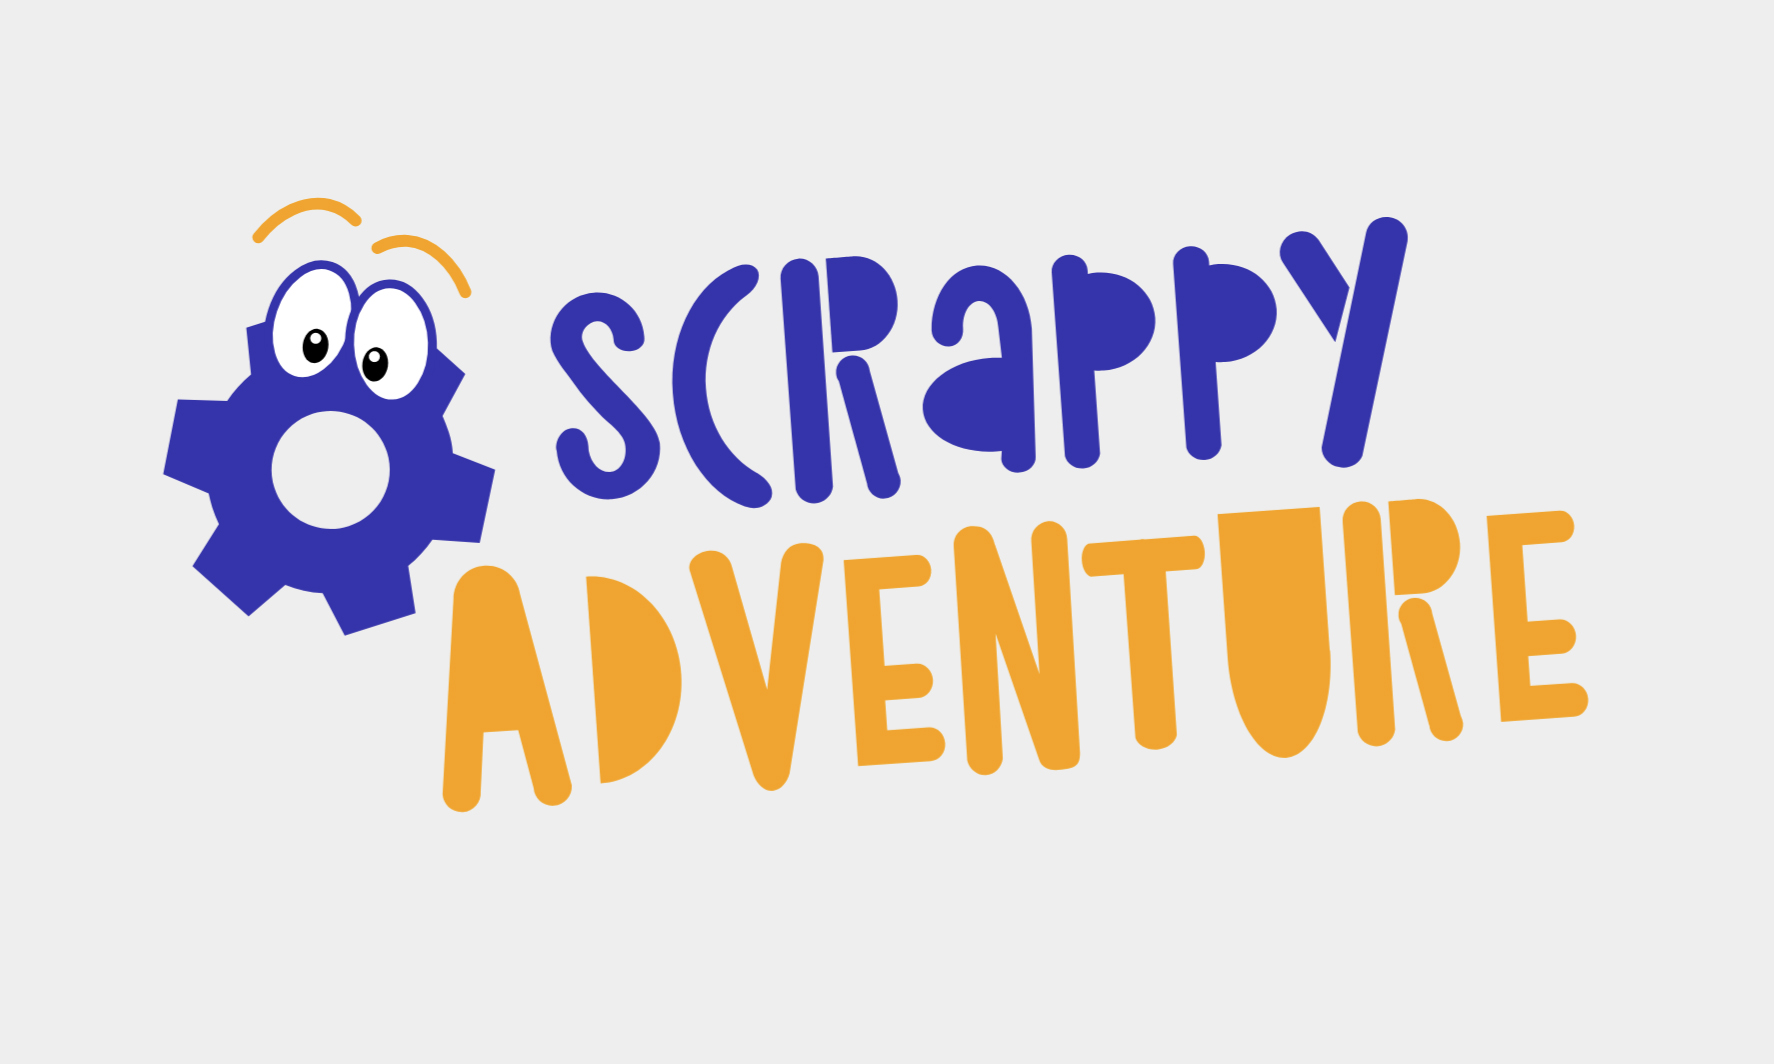 Scrappy Adventure